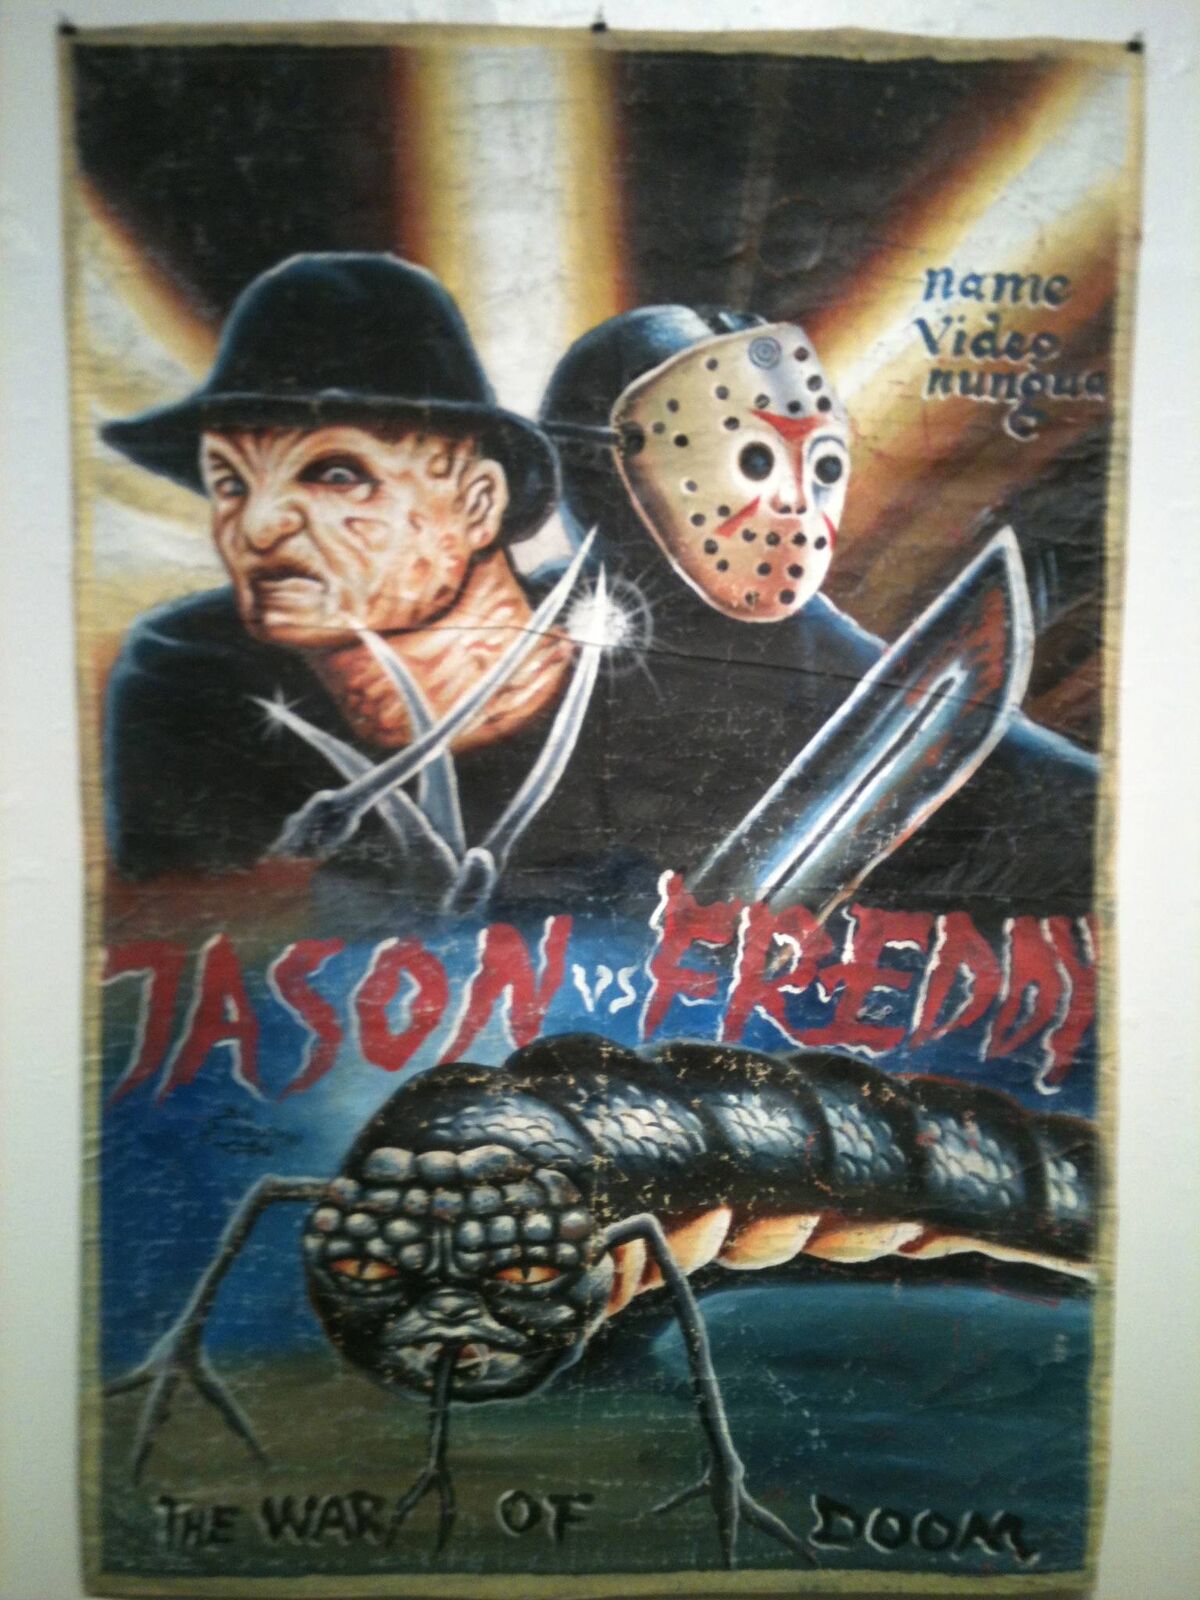 Jason vs Freddy West African film poster